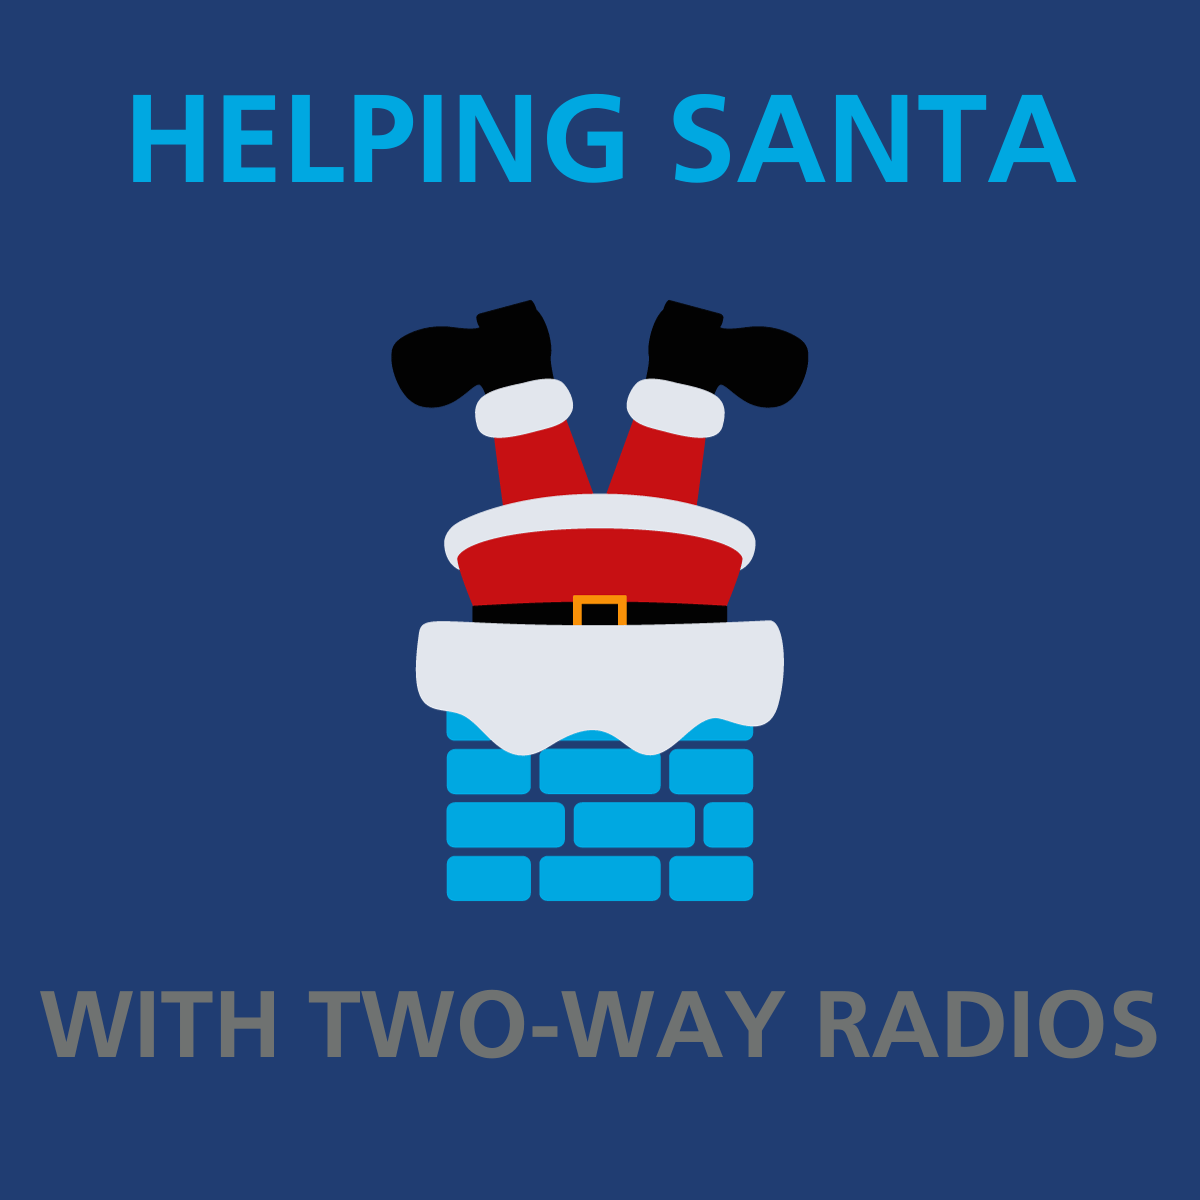 How Two-Way Radios Can Help Santa Deliver Presents